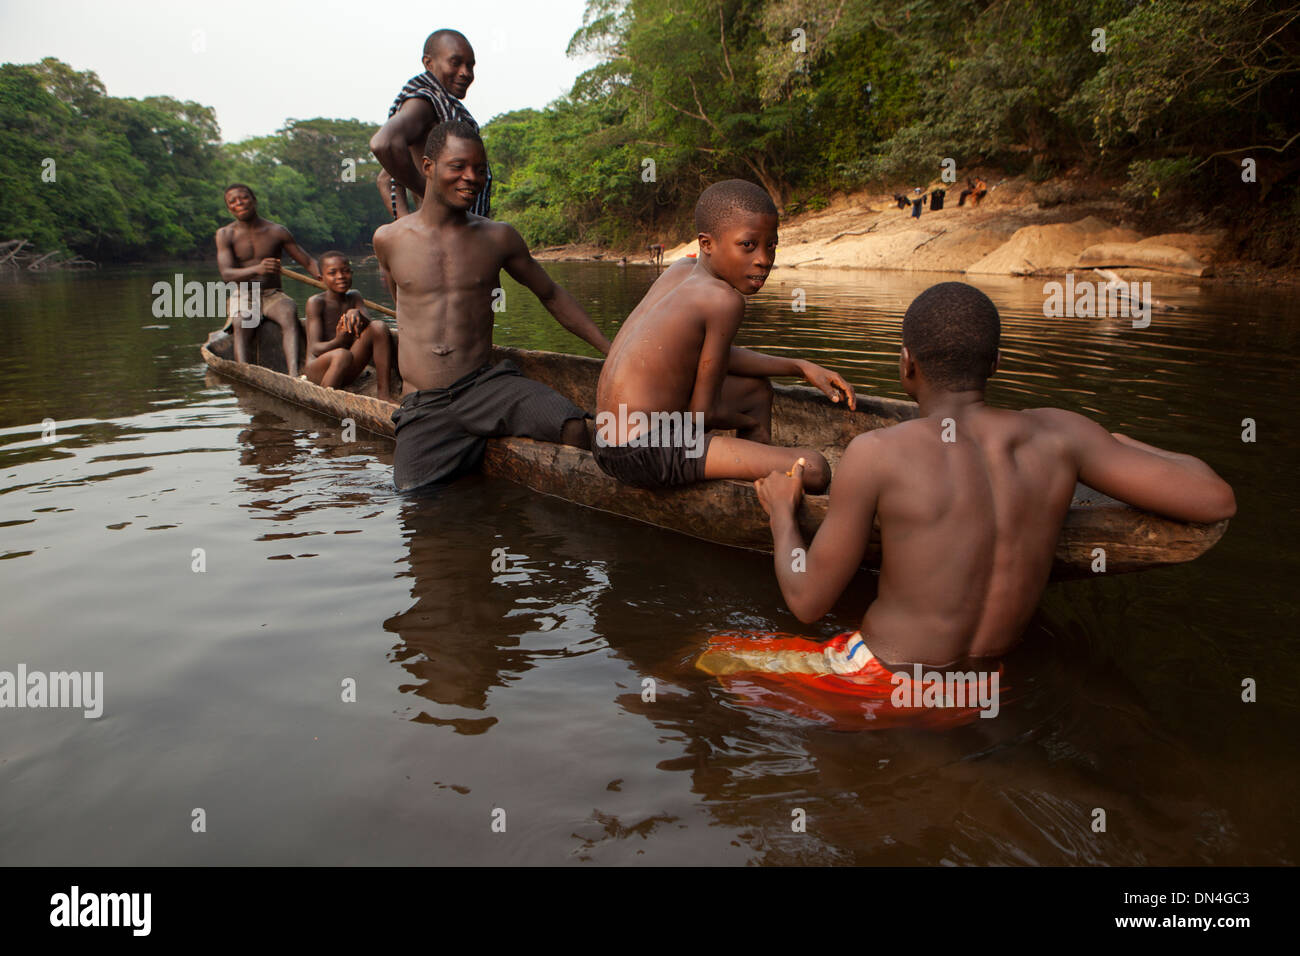 Angelique tree boat in a shallow river in Bo region, Sierra Leone. Stock Photo